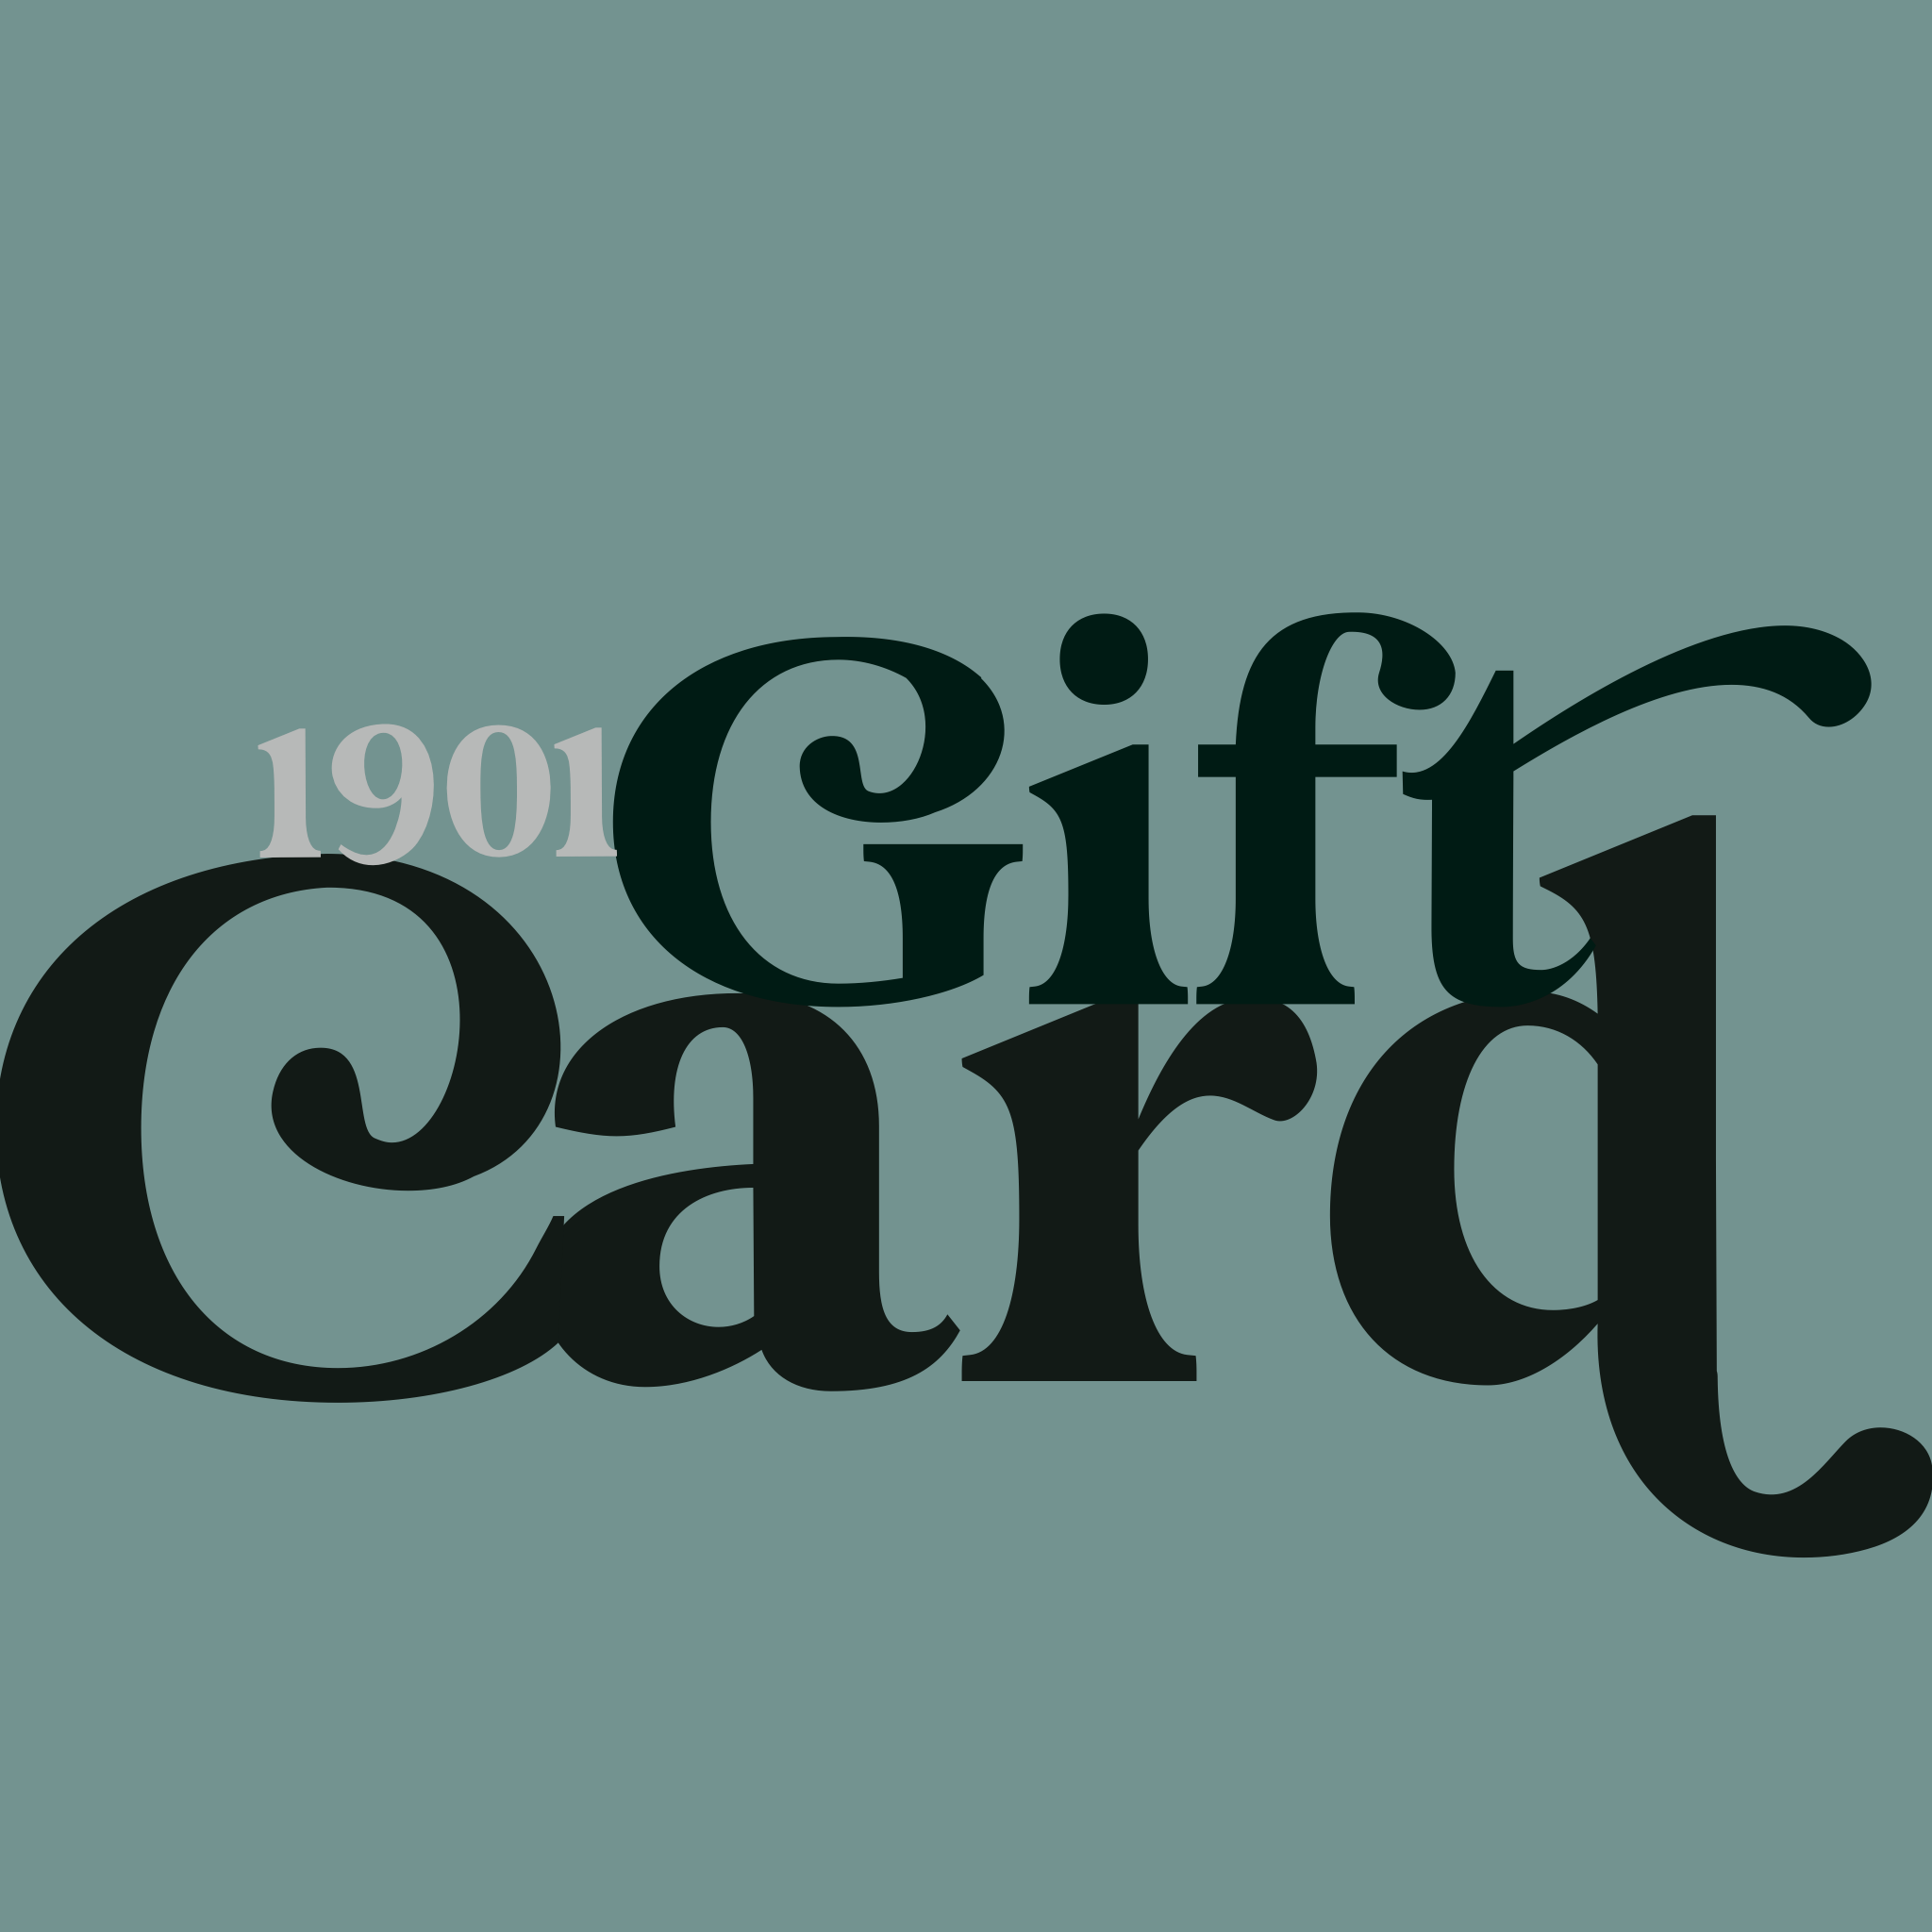 1901 Gift Card